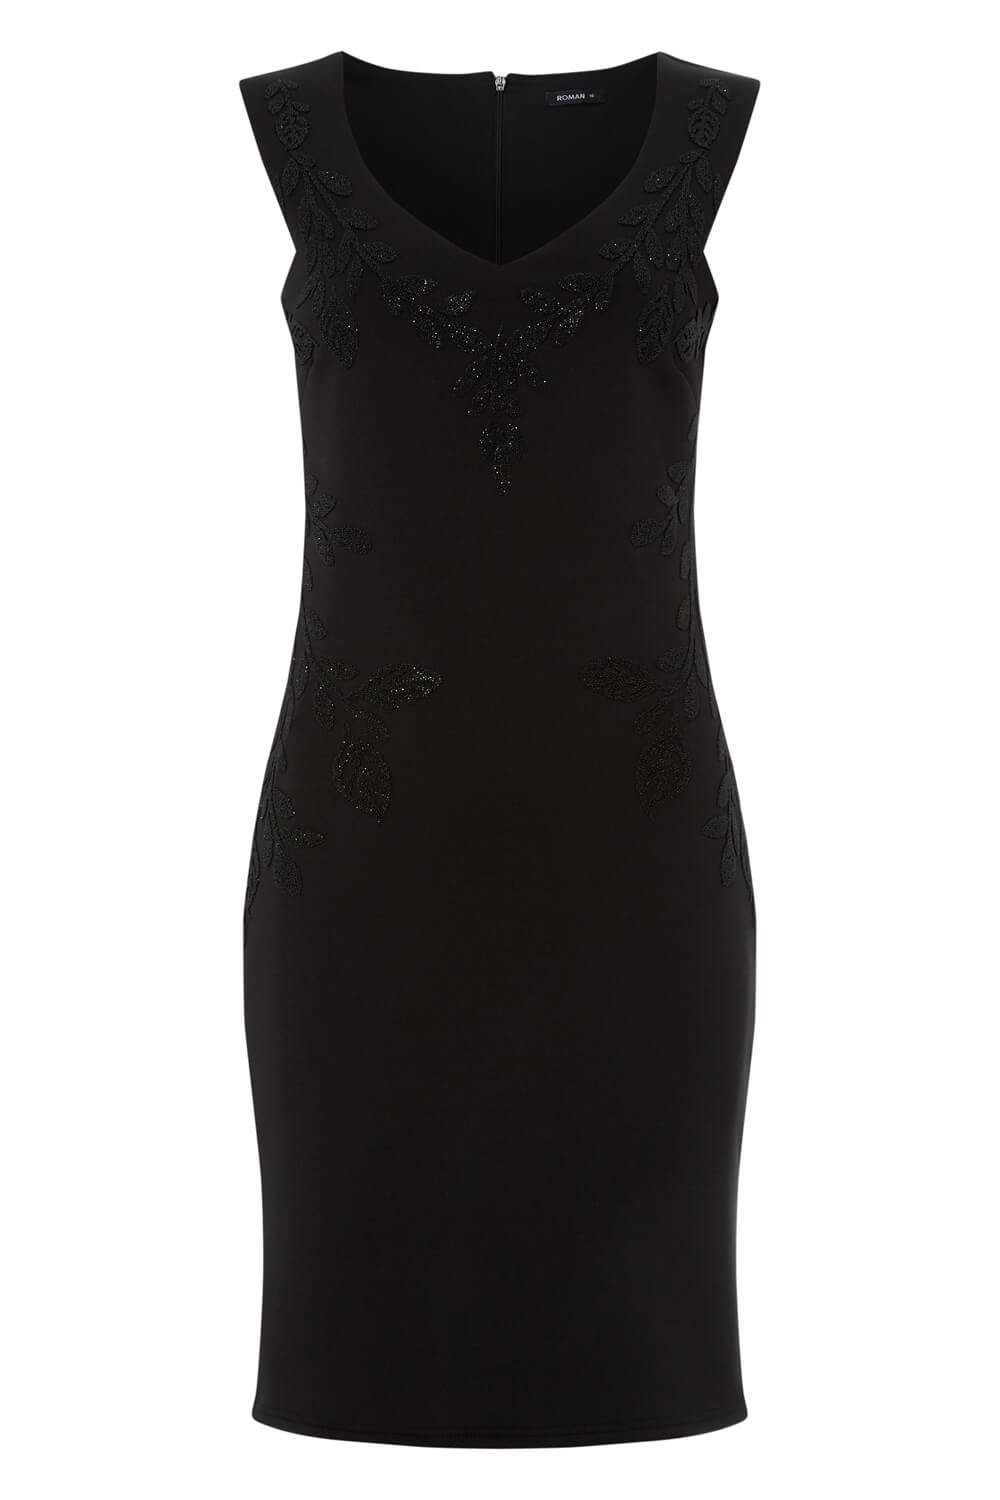 Black Bead Embellished Shift Dress, Image 5 of 5